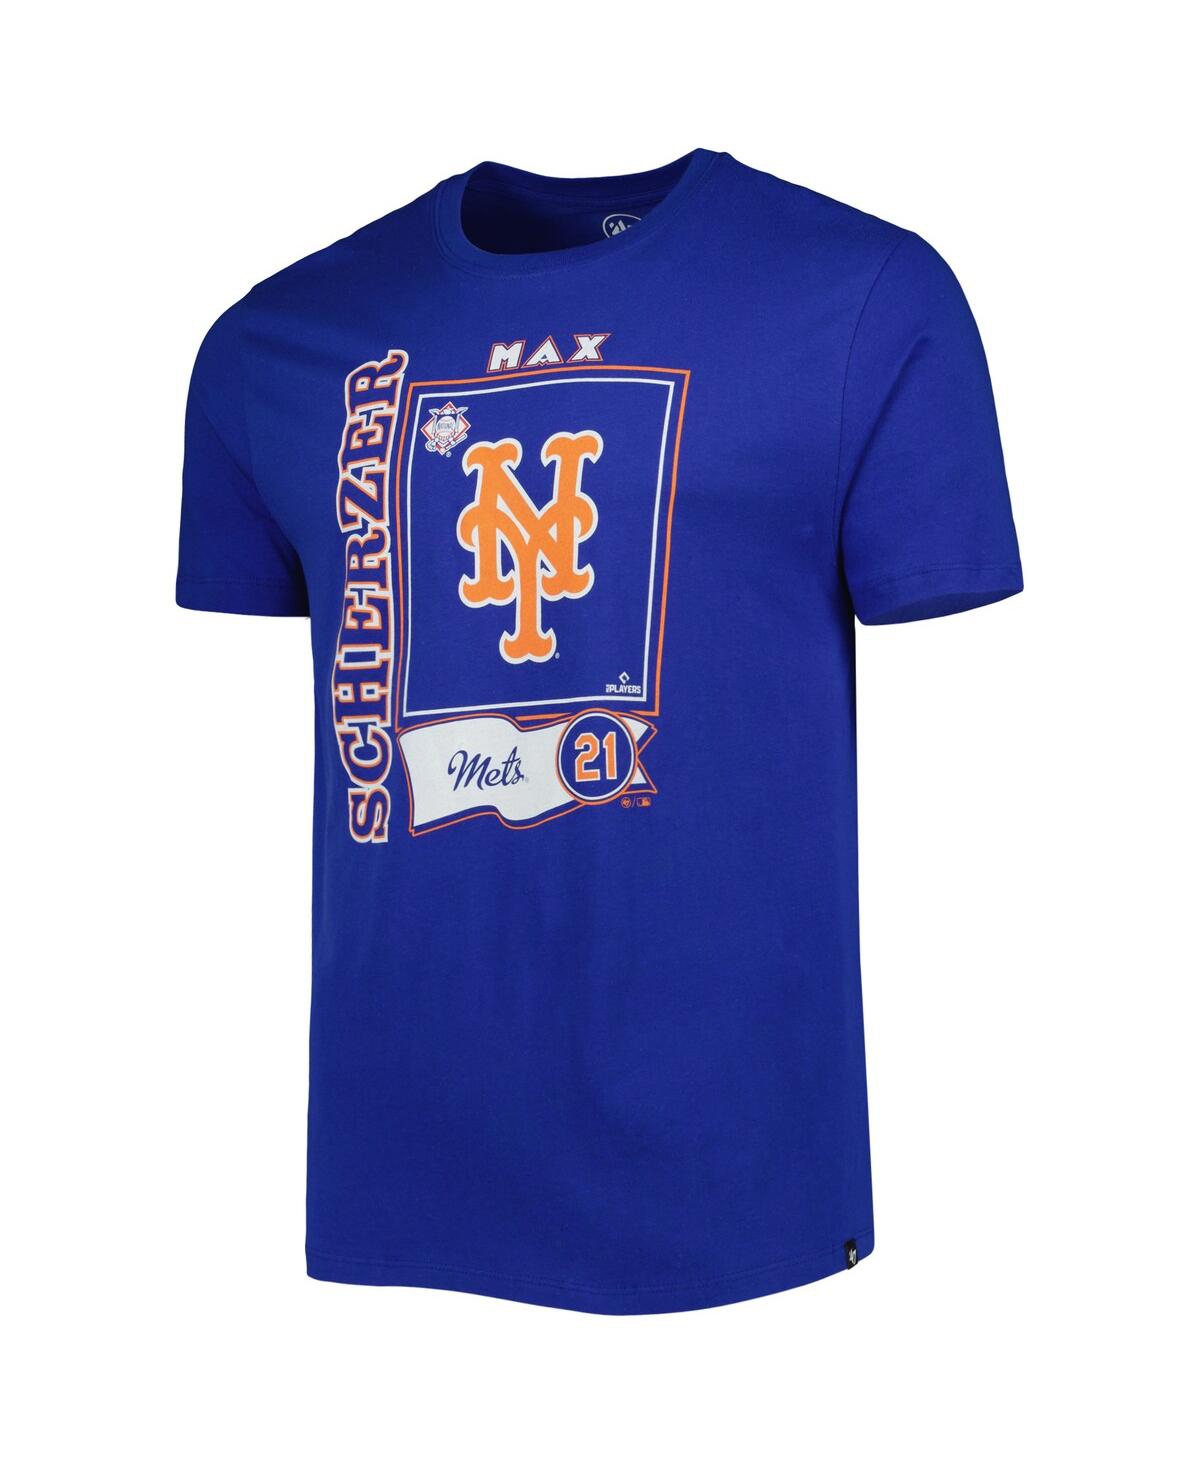 Shop 47 Brand Men's '47 Max Scherzer Royal New York Mets Super Rival Player T-shirt